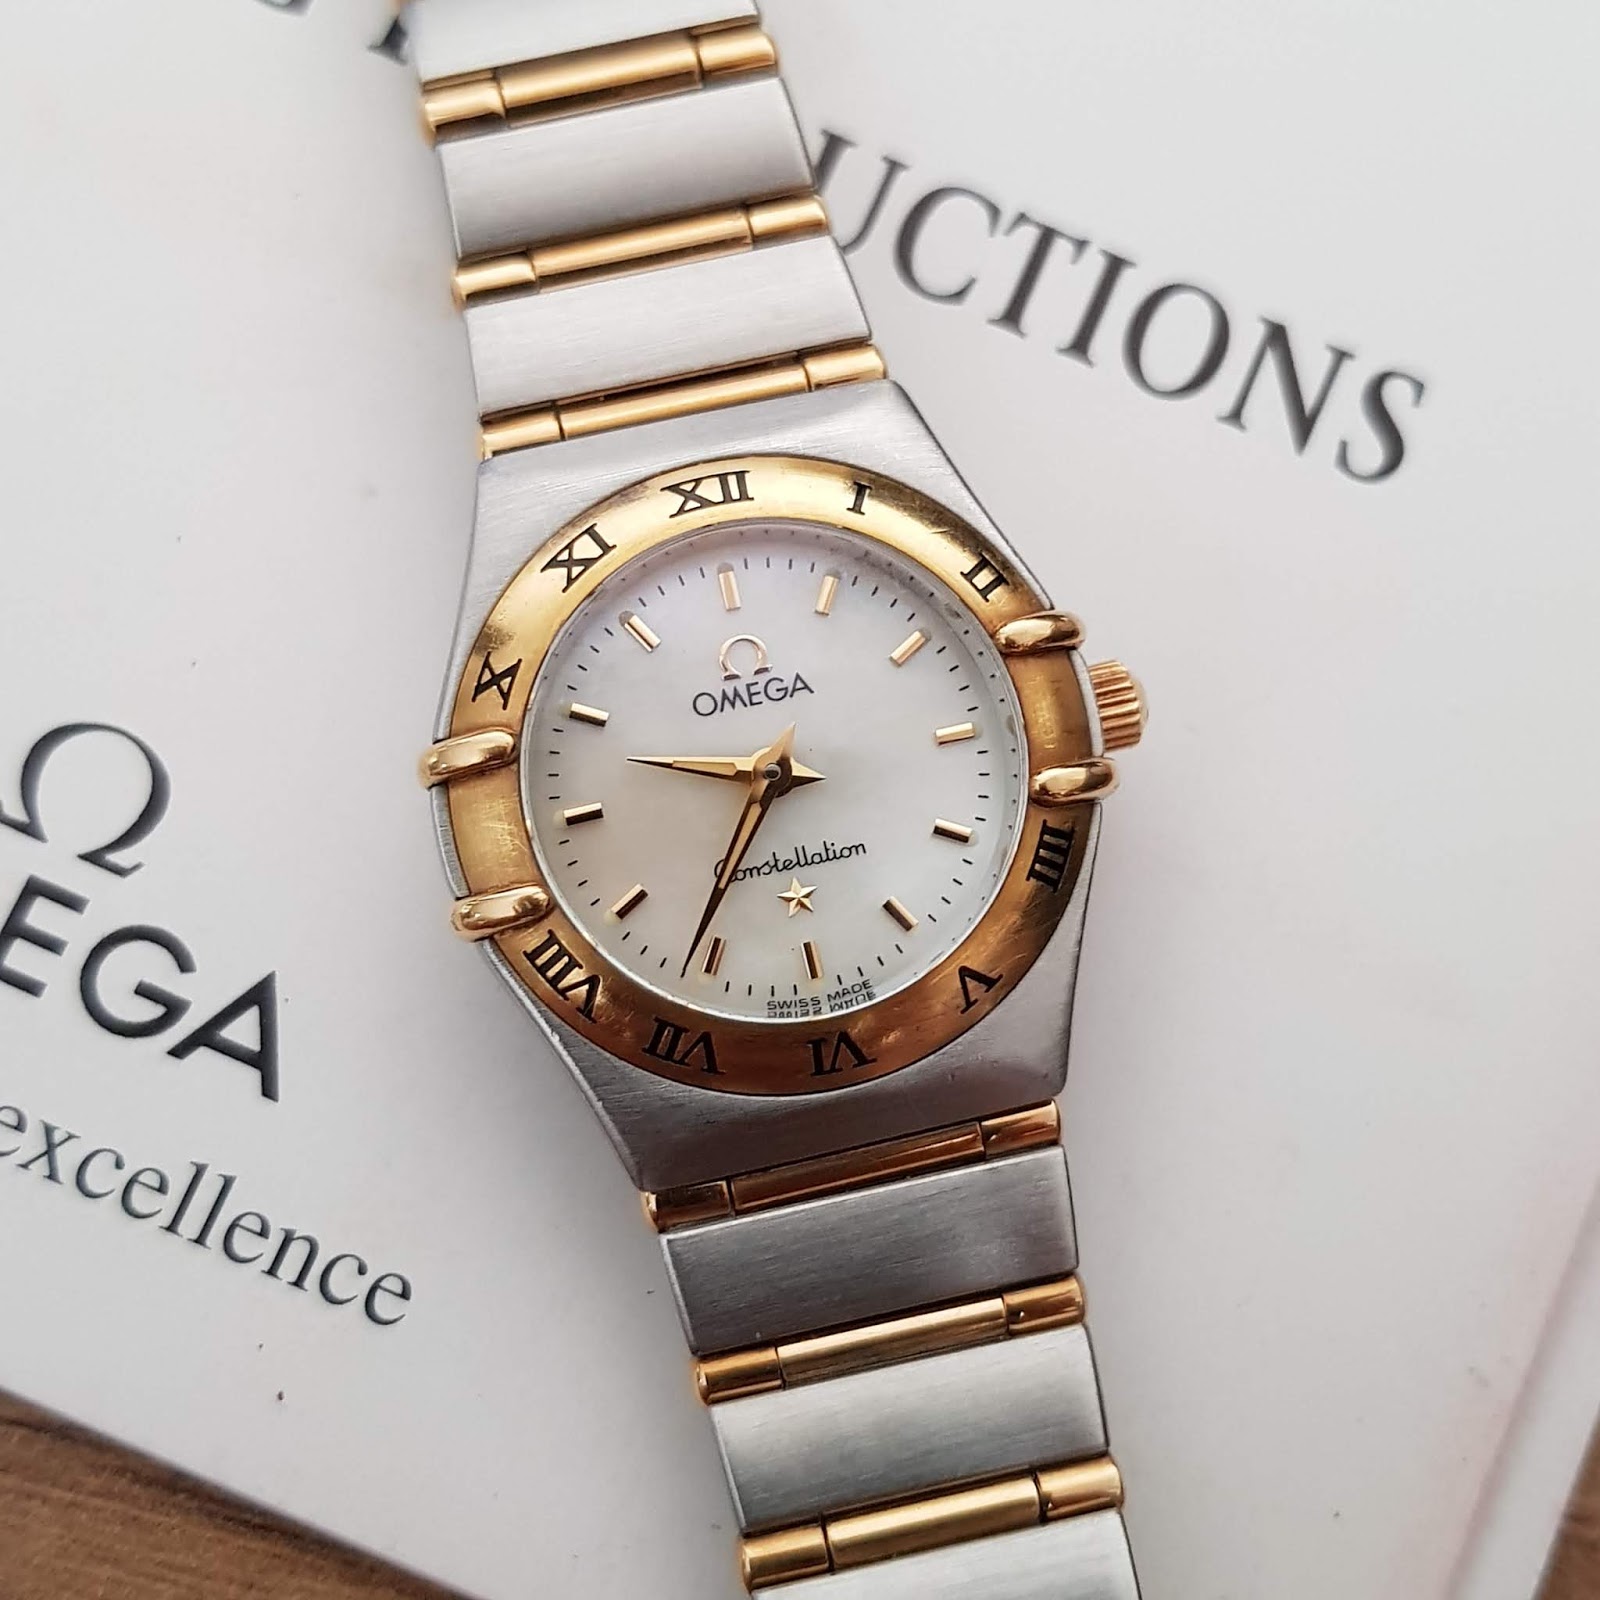 jam tangan omega constellation original